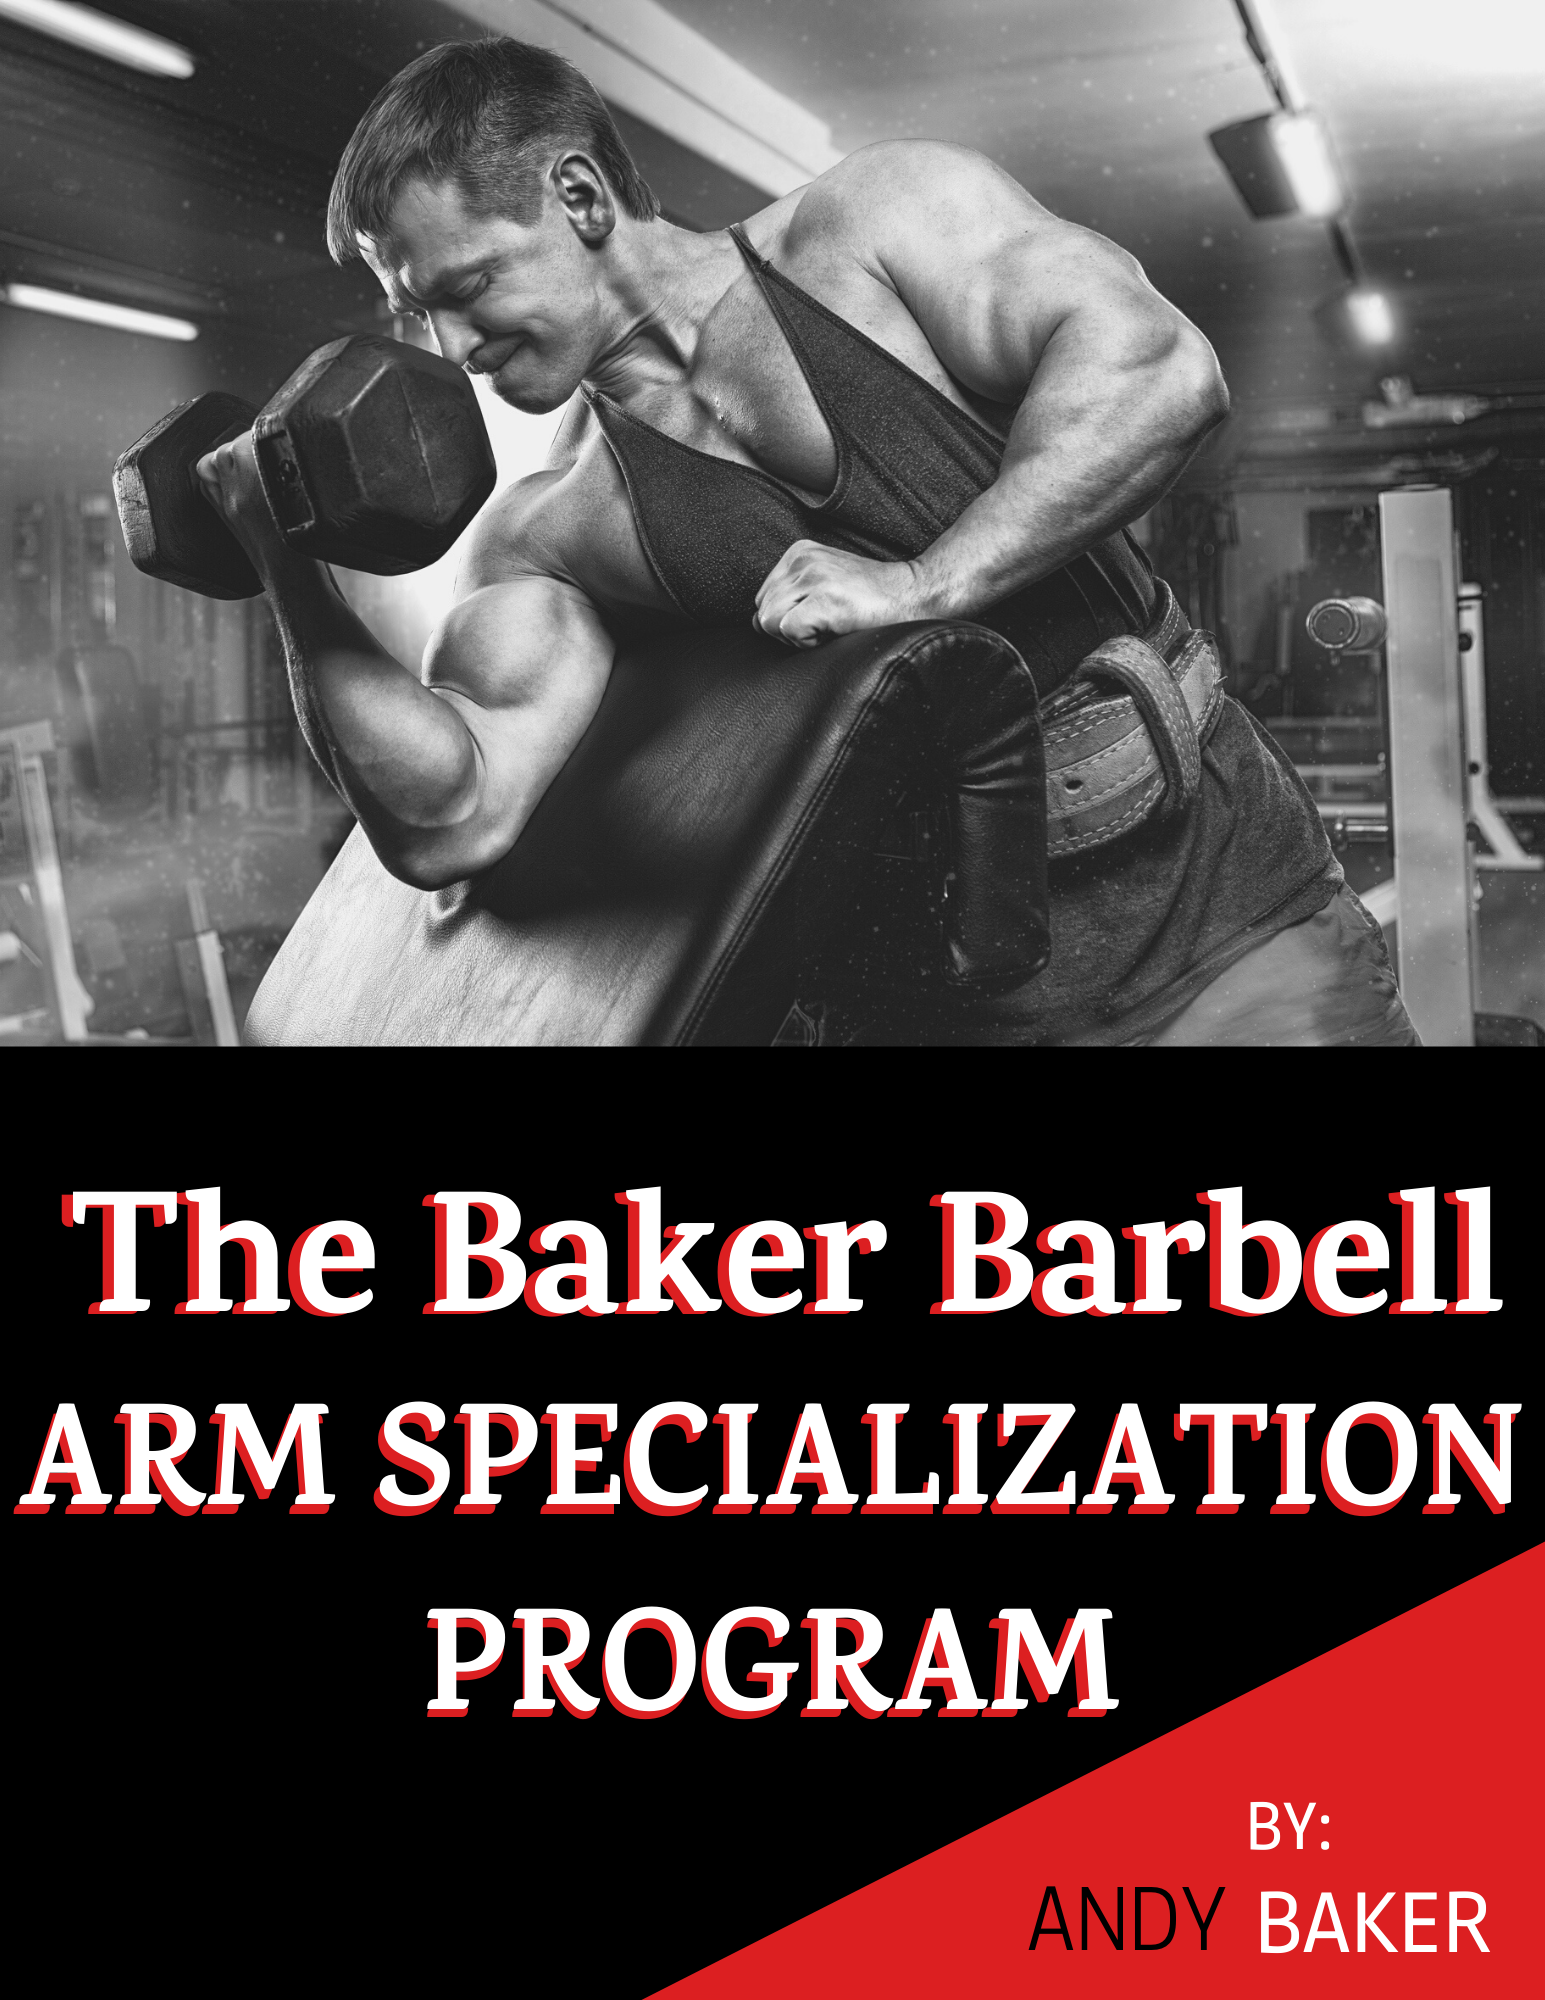 https://www.andybaker.com/wp-content/uploads/2021/01/The-Baker-Barbell-Arm-Specialization-Program-3.png